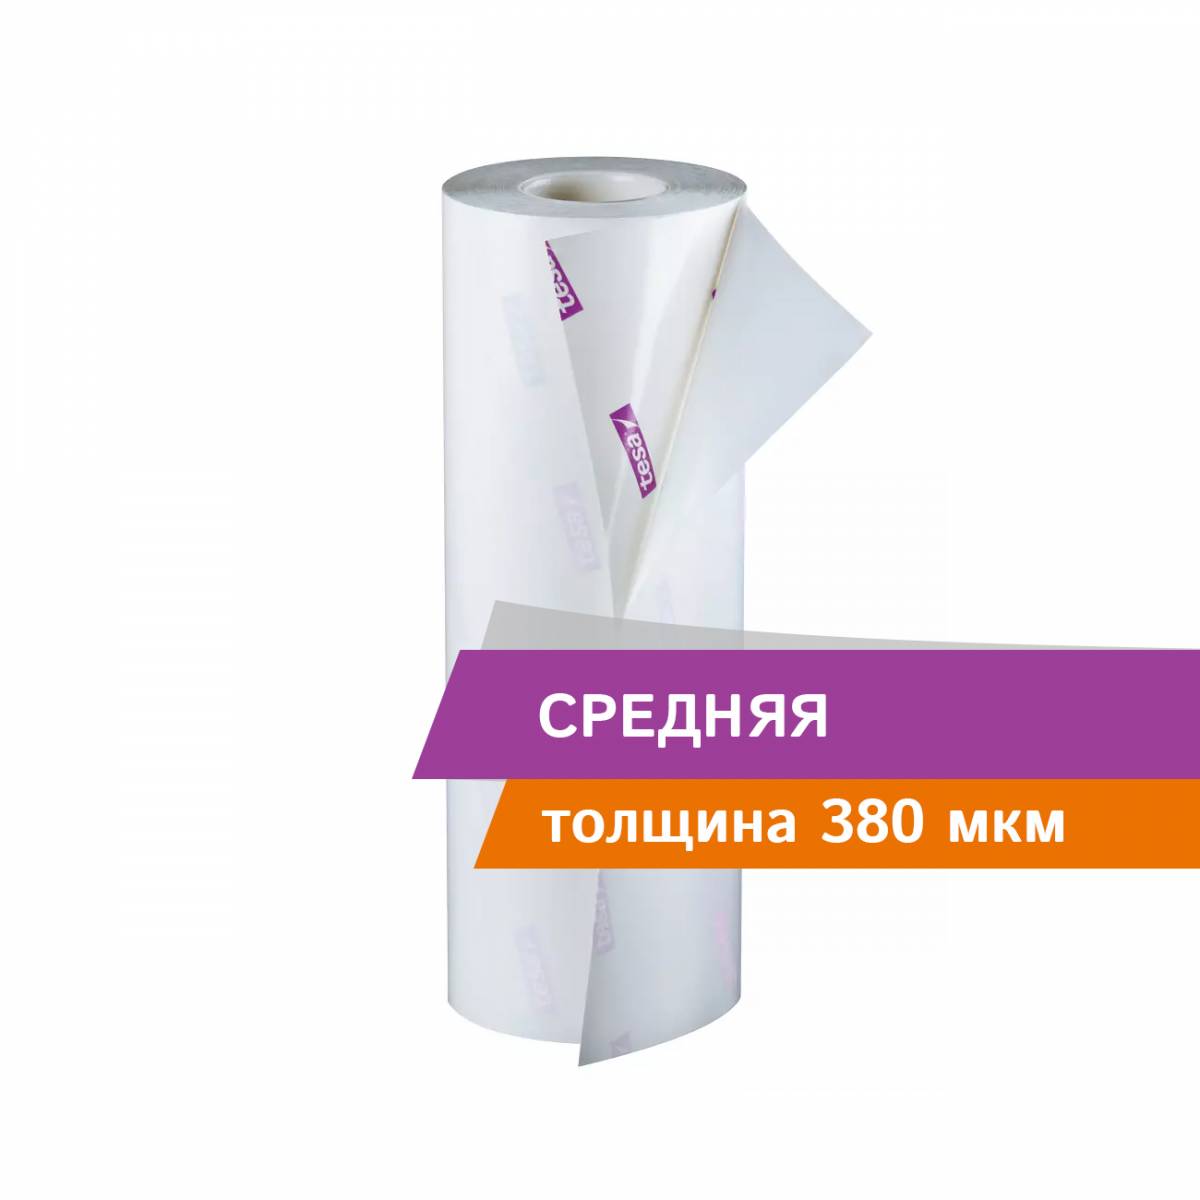 Tesa Softprint 52816 Secure (25м х 1380мм) толщиной 380 мкм, двусторонняя клейкая лента для монтажа флексографических печатных форм